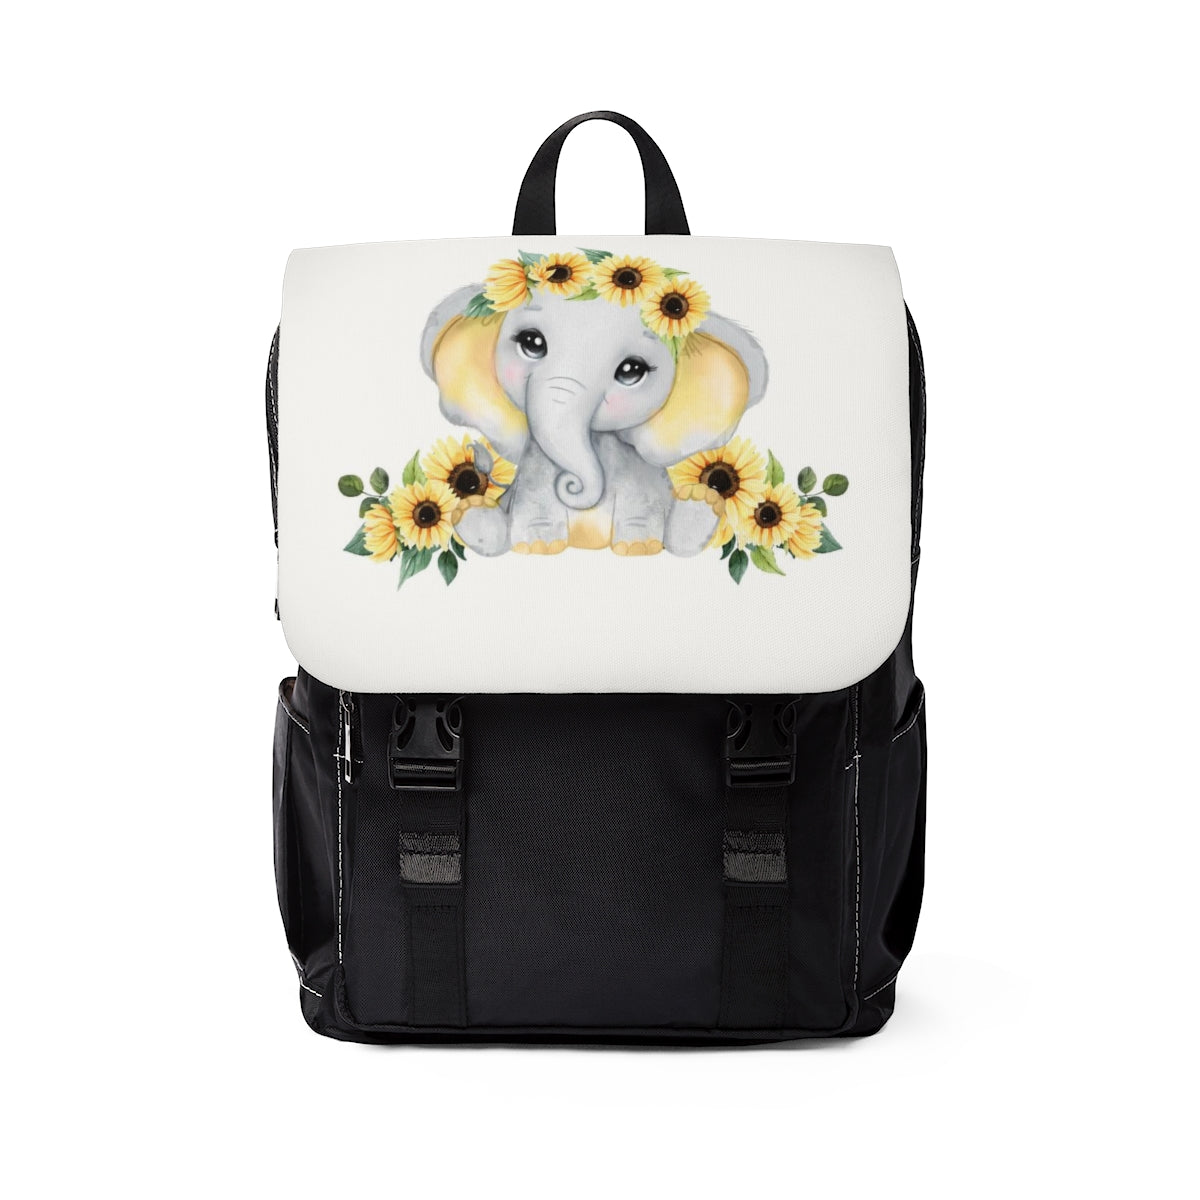 Baby elephant Backpack